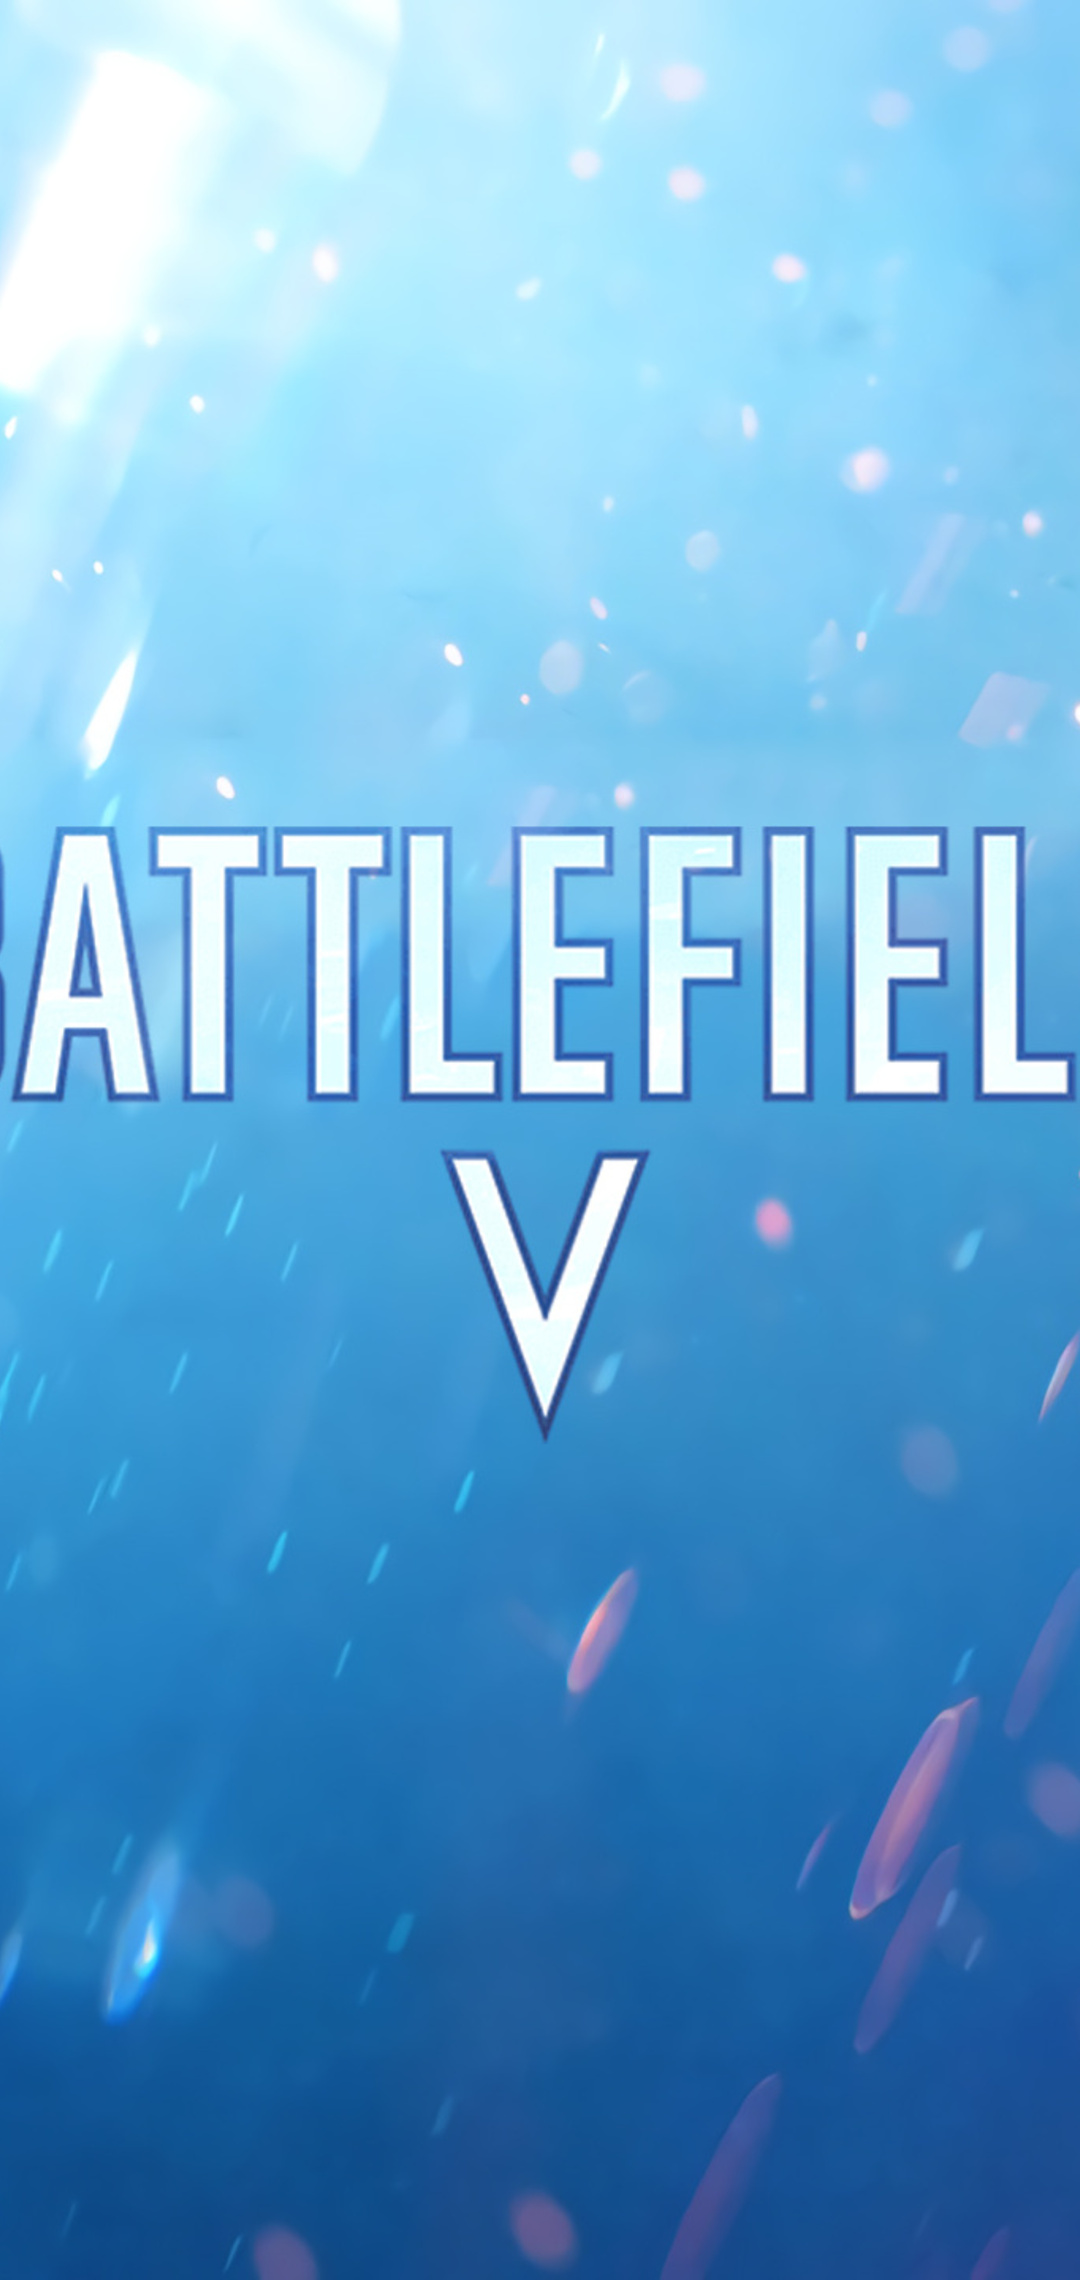 battlefield-v-video-game-logo-vt.jpg